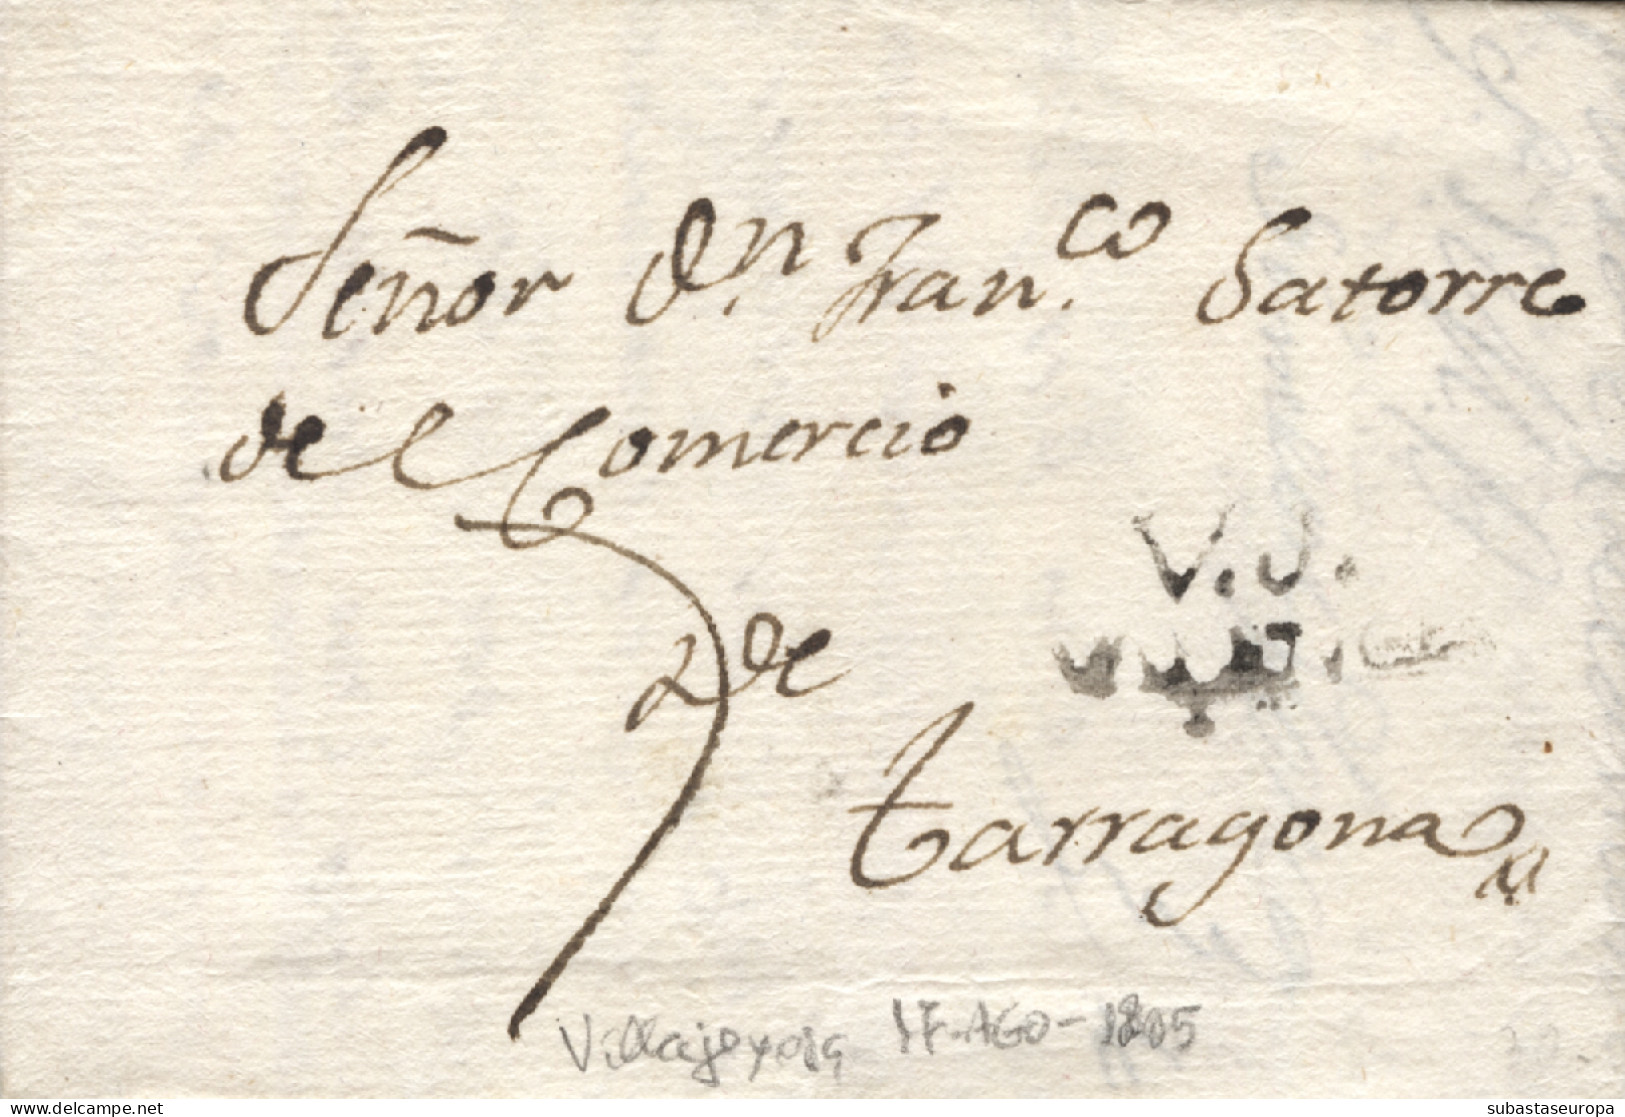 D.P. 19. 1805. Carta De Villajoyosa A Tarragona, En Tinta De Escribir. Porteo 5 Manuscrito. - ...-1850 Vorphilatelie